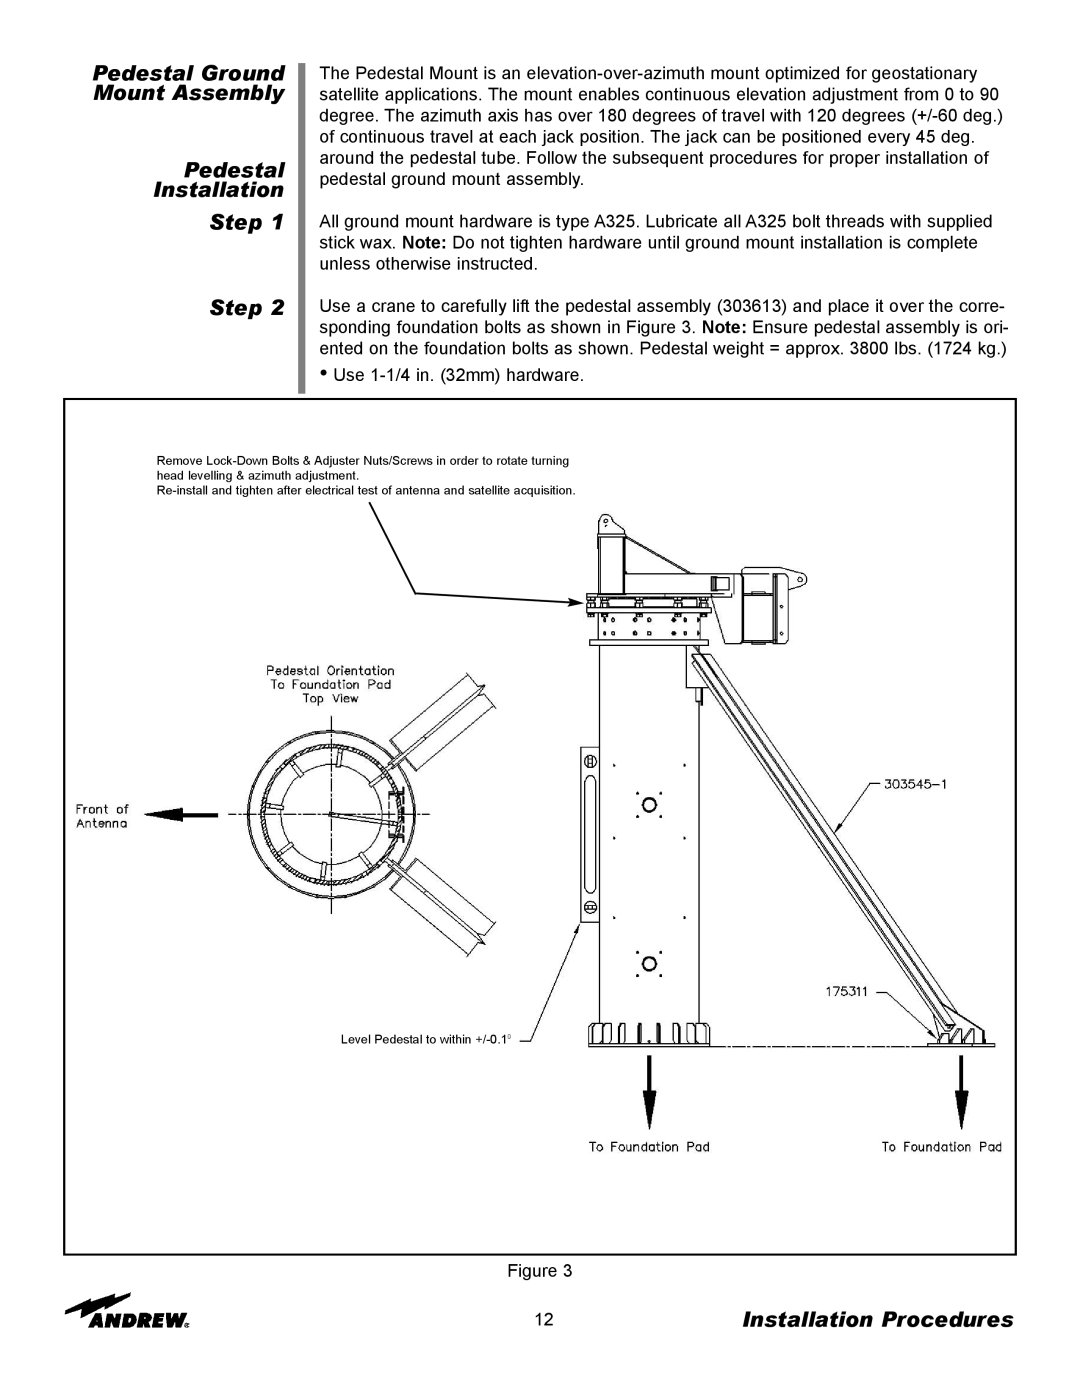 Andrew ES76PK-1 Pedestal Ground Mount Assembly Pedestal, Installation Step Step, Installation Procedures 